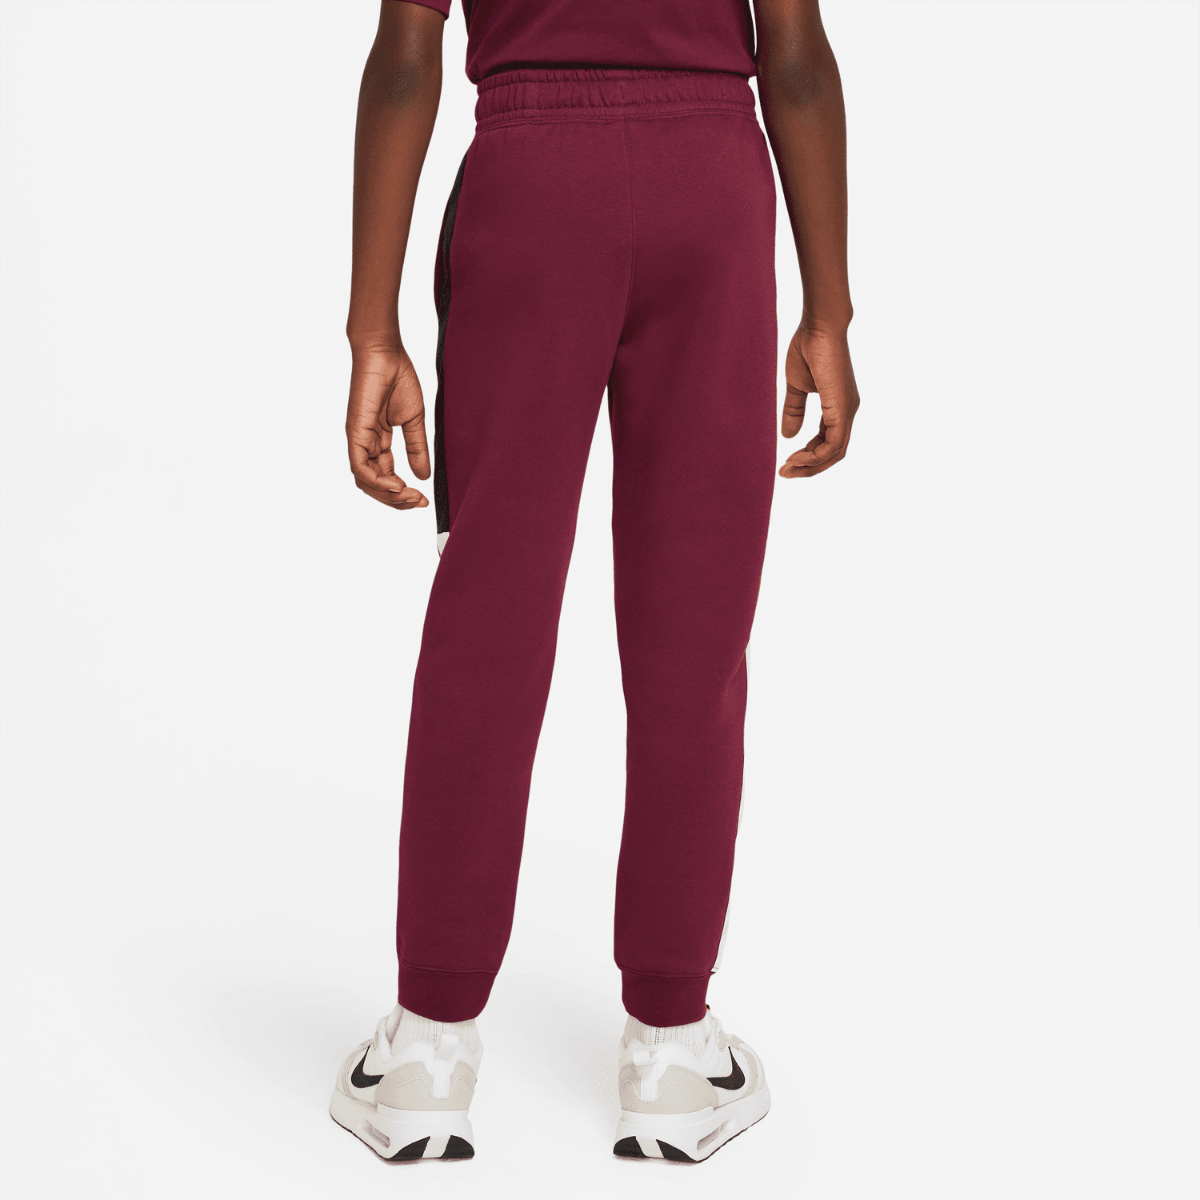 Pantalon Nike Sportswear Tech Fleece Junior - Bordeaux/Blanc/Noir